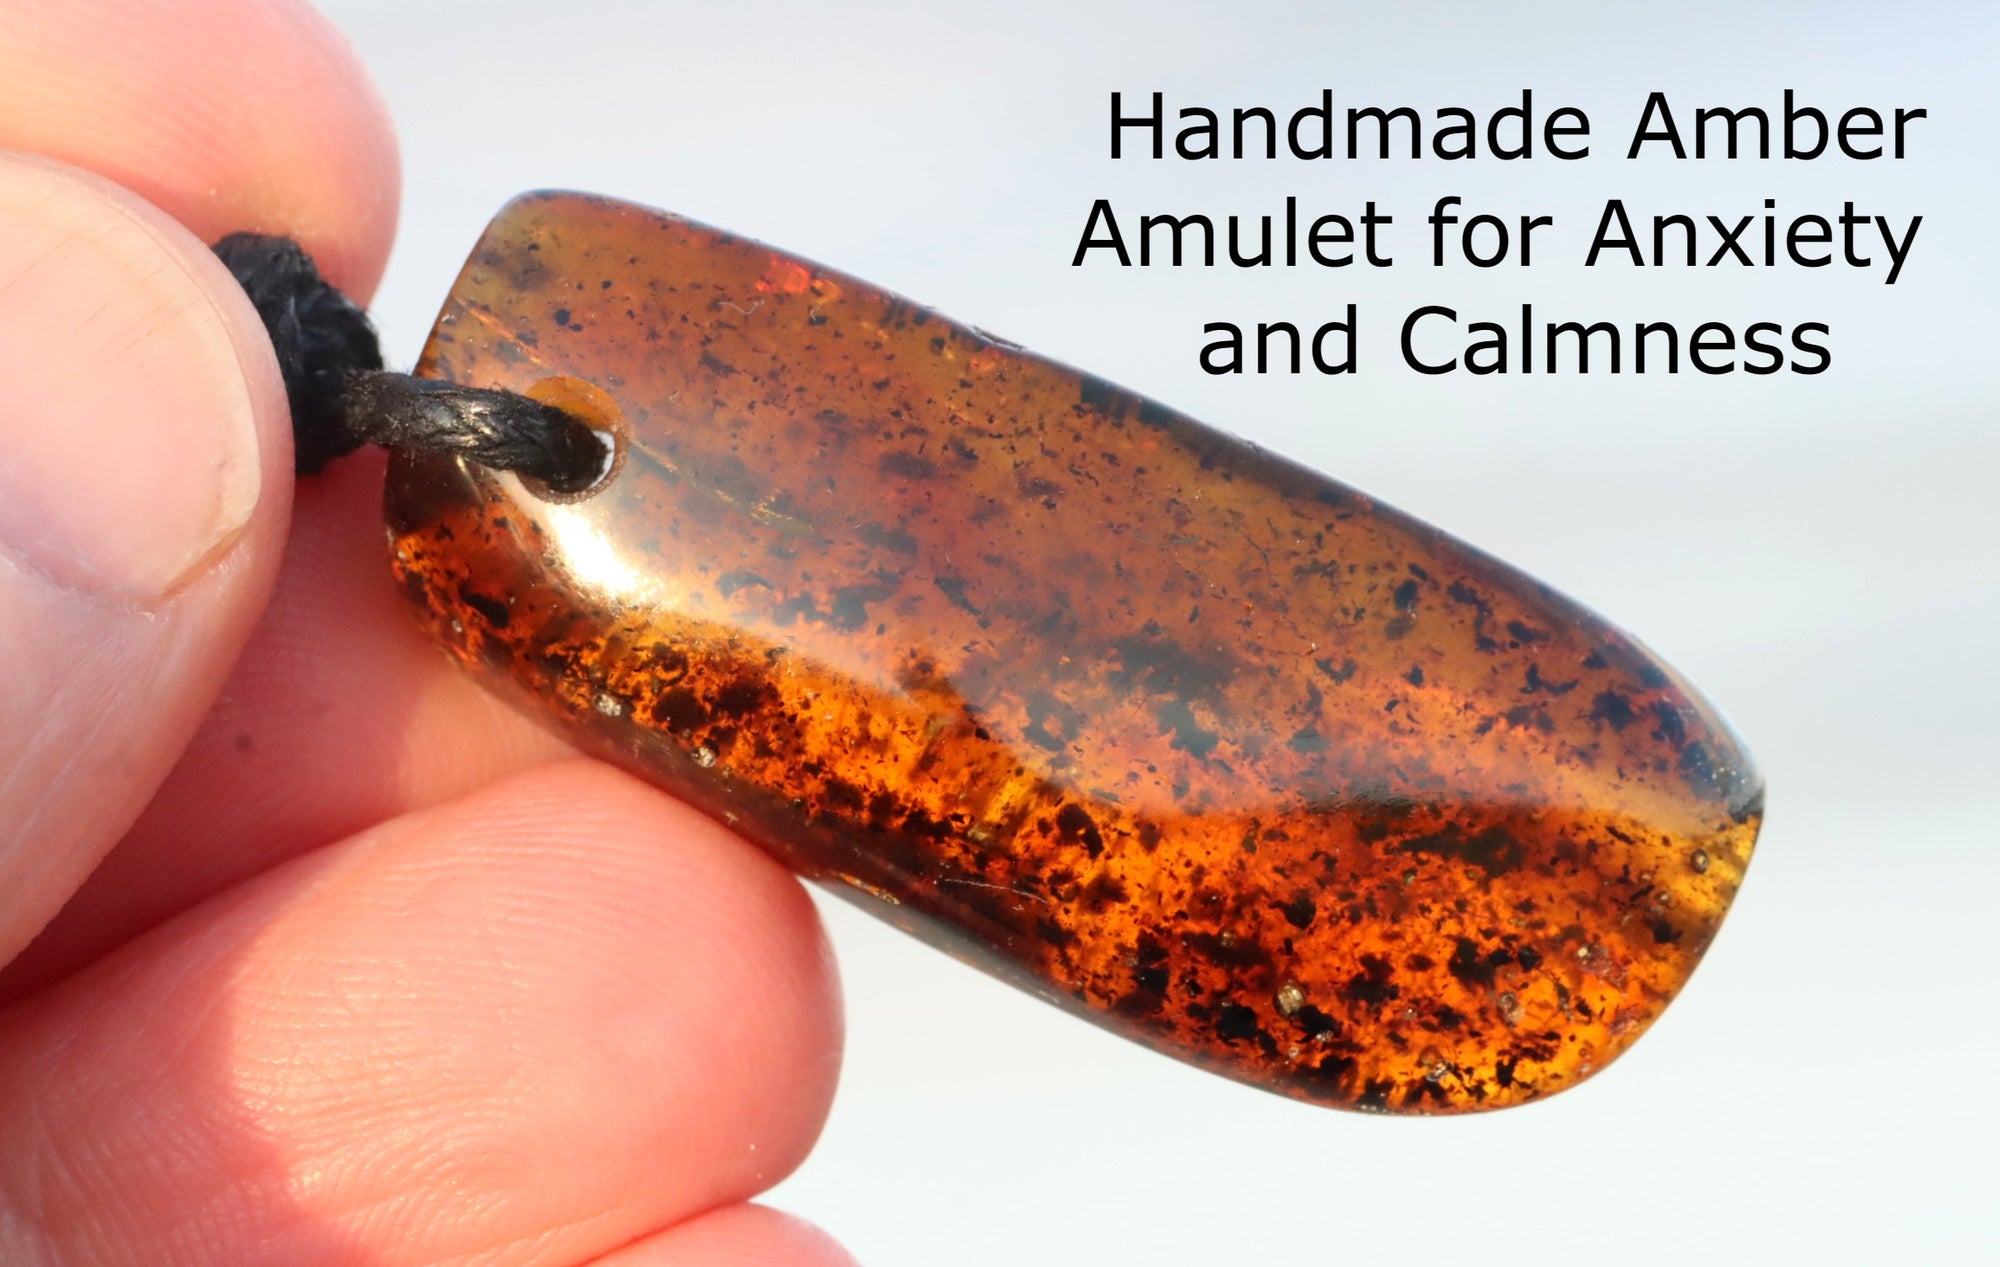 Baltic Amber Amulet